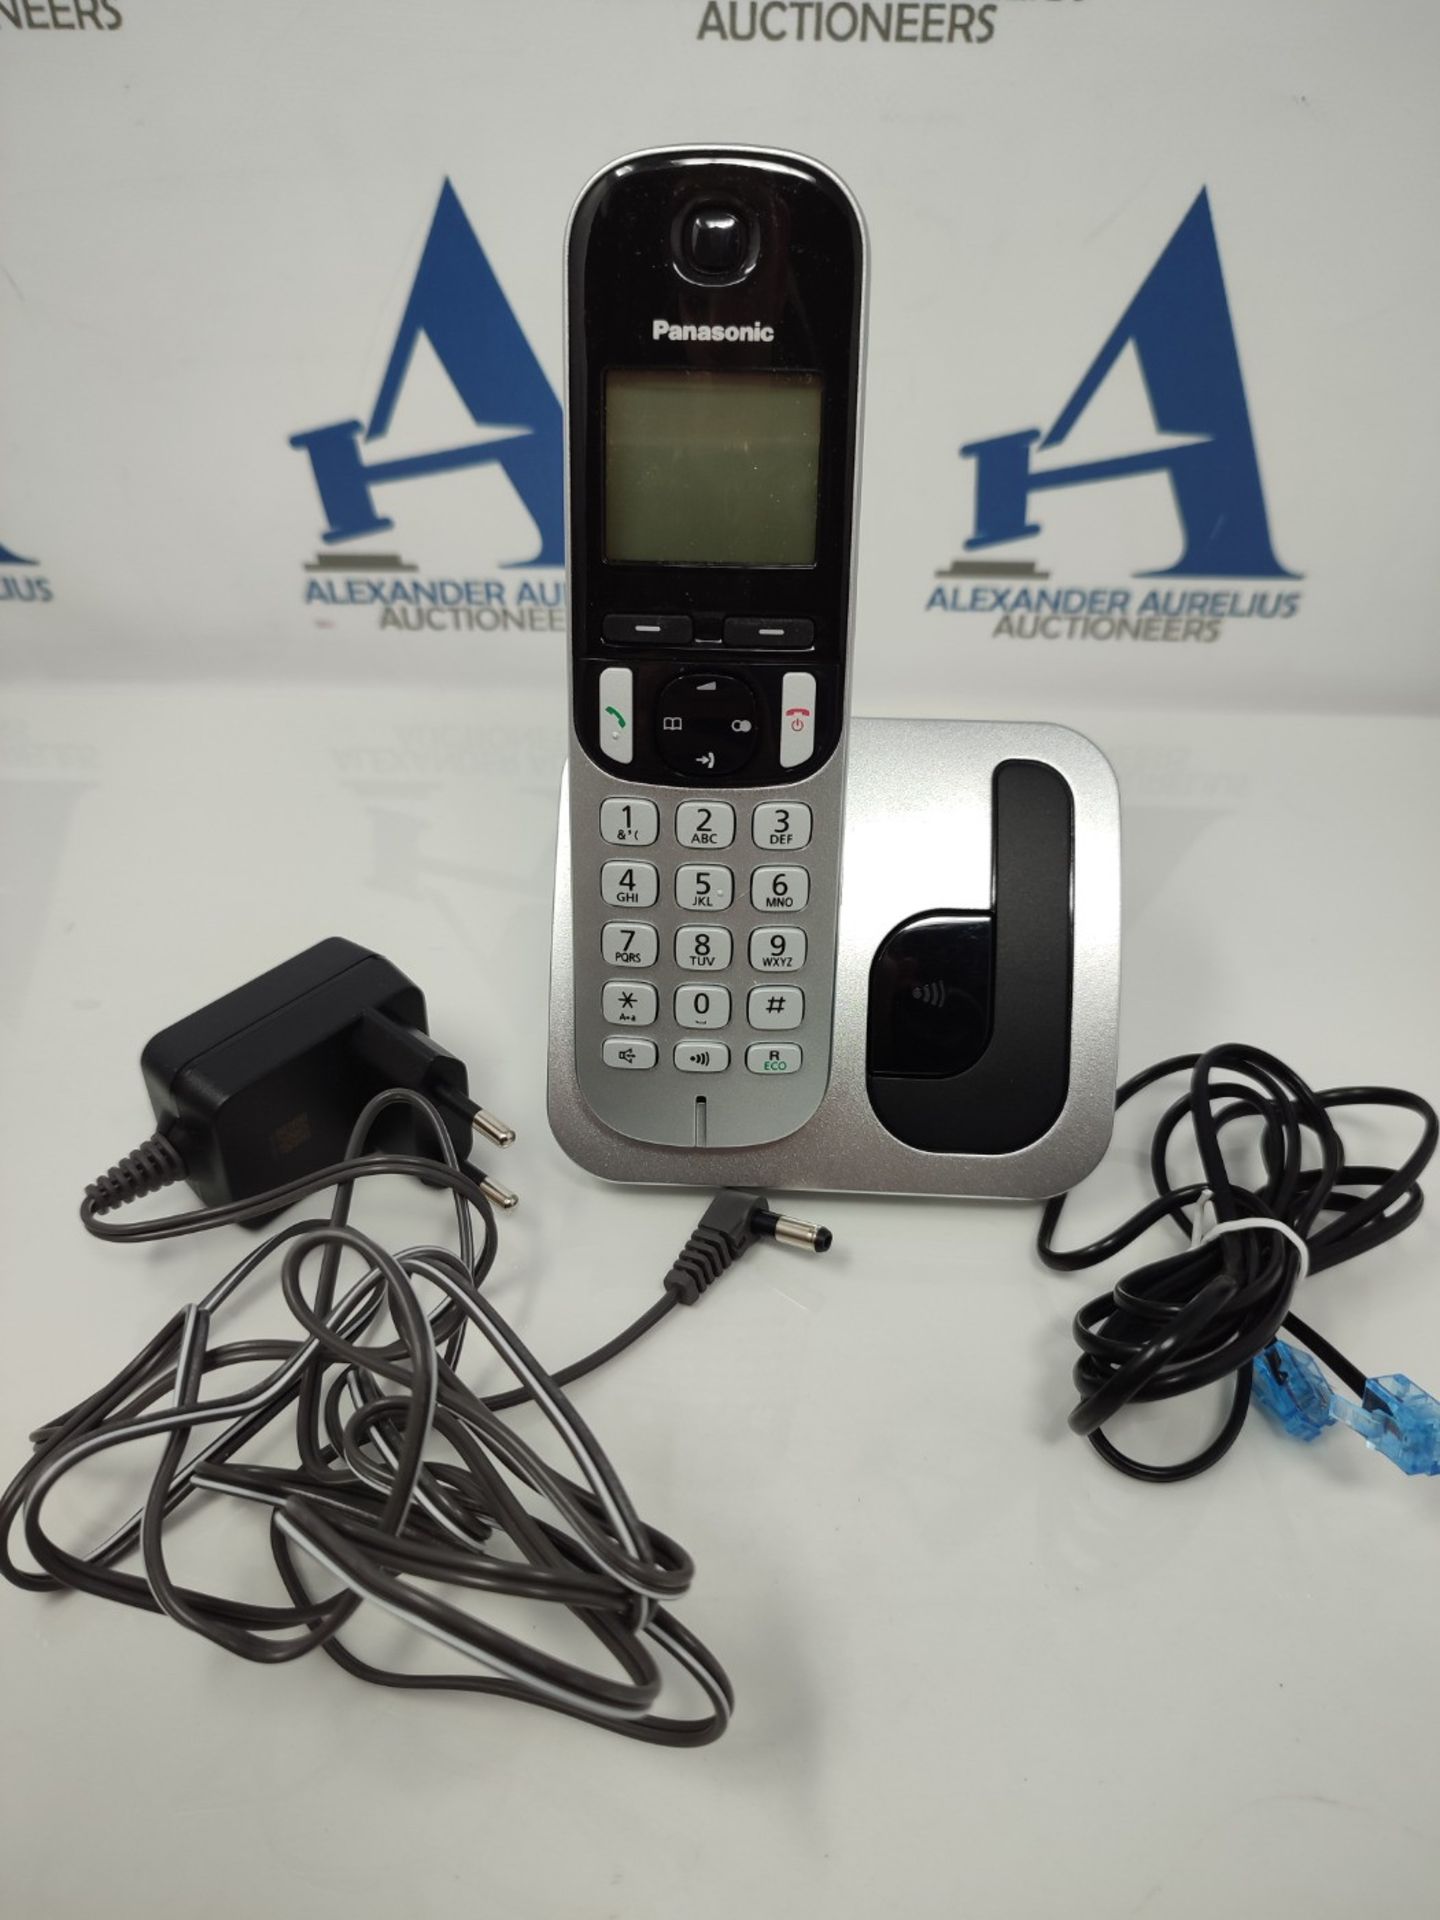 Panasonic Wireless landline telephone with LCD, caller ID, 50-number phone book, navig - Image 3 of 3